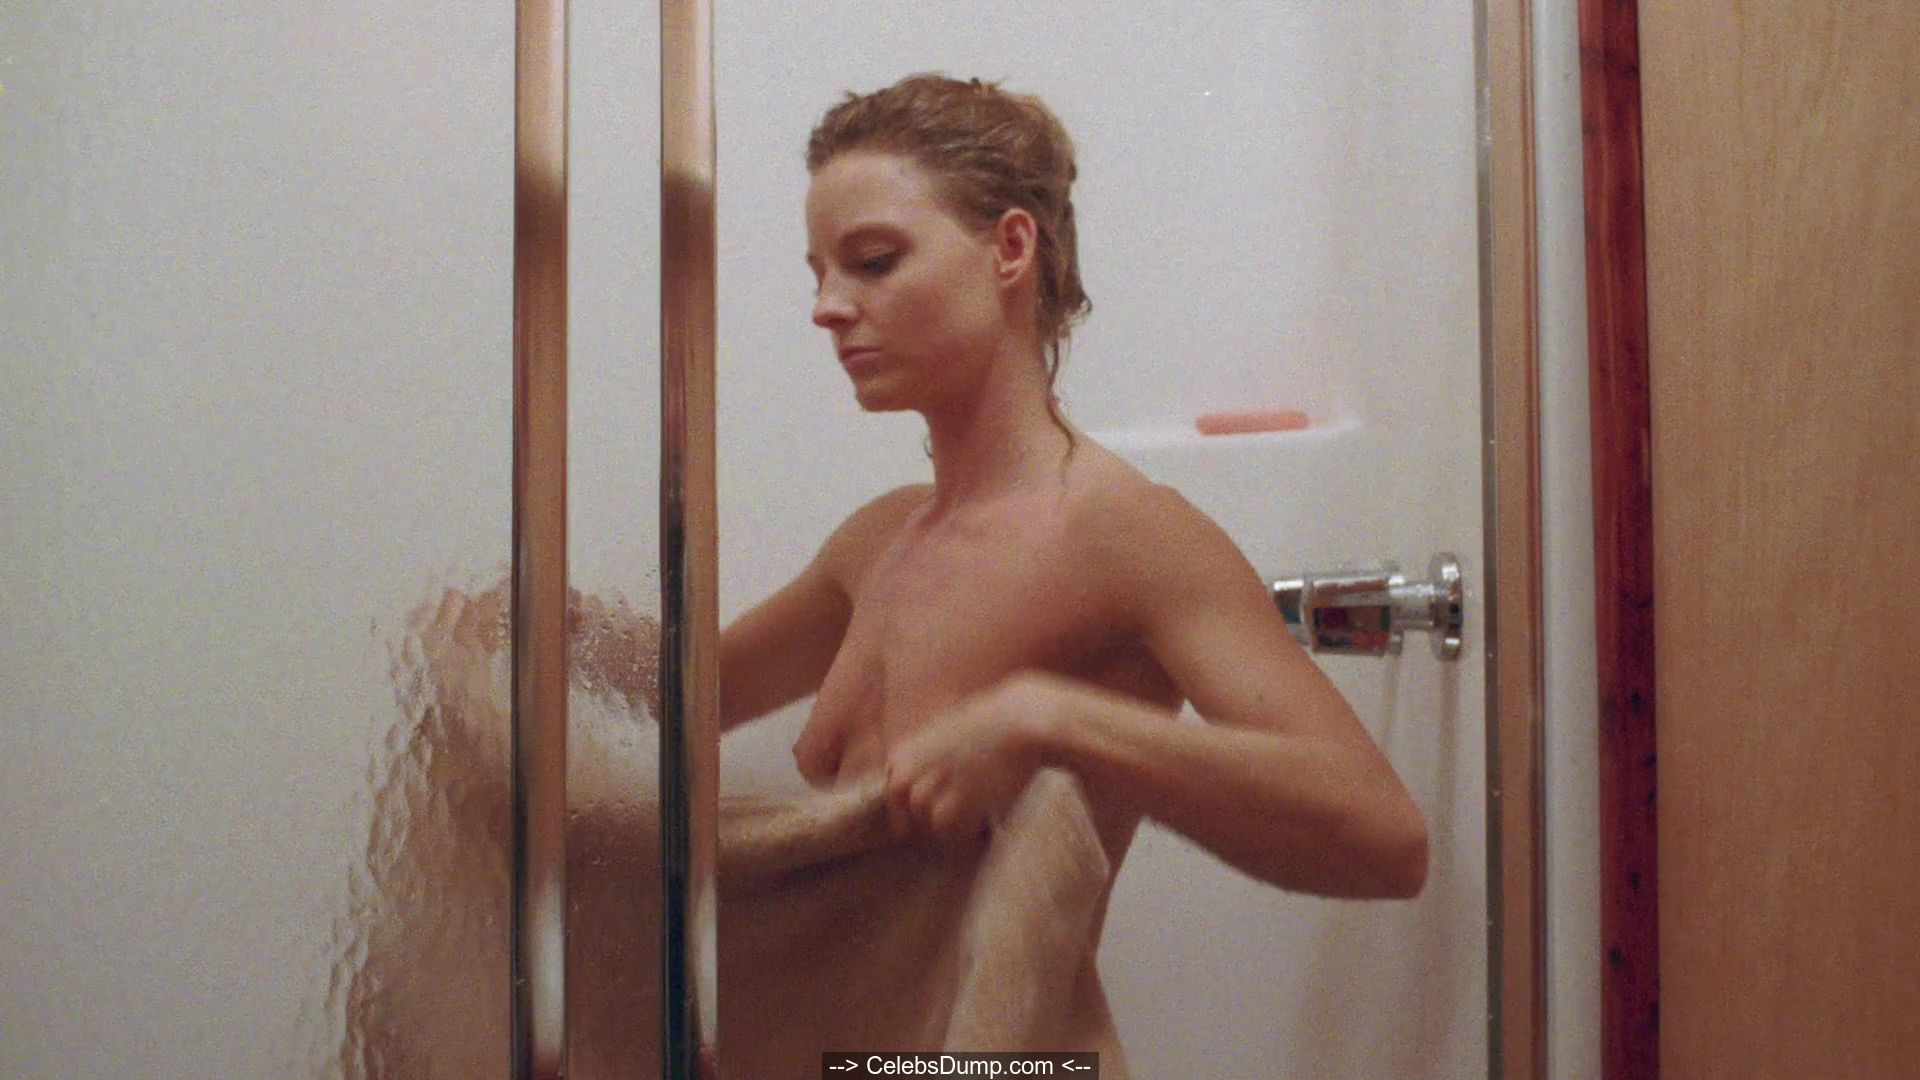 Jodie Foster nude tits in Catchfire (1991) Celebs Dump. 